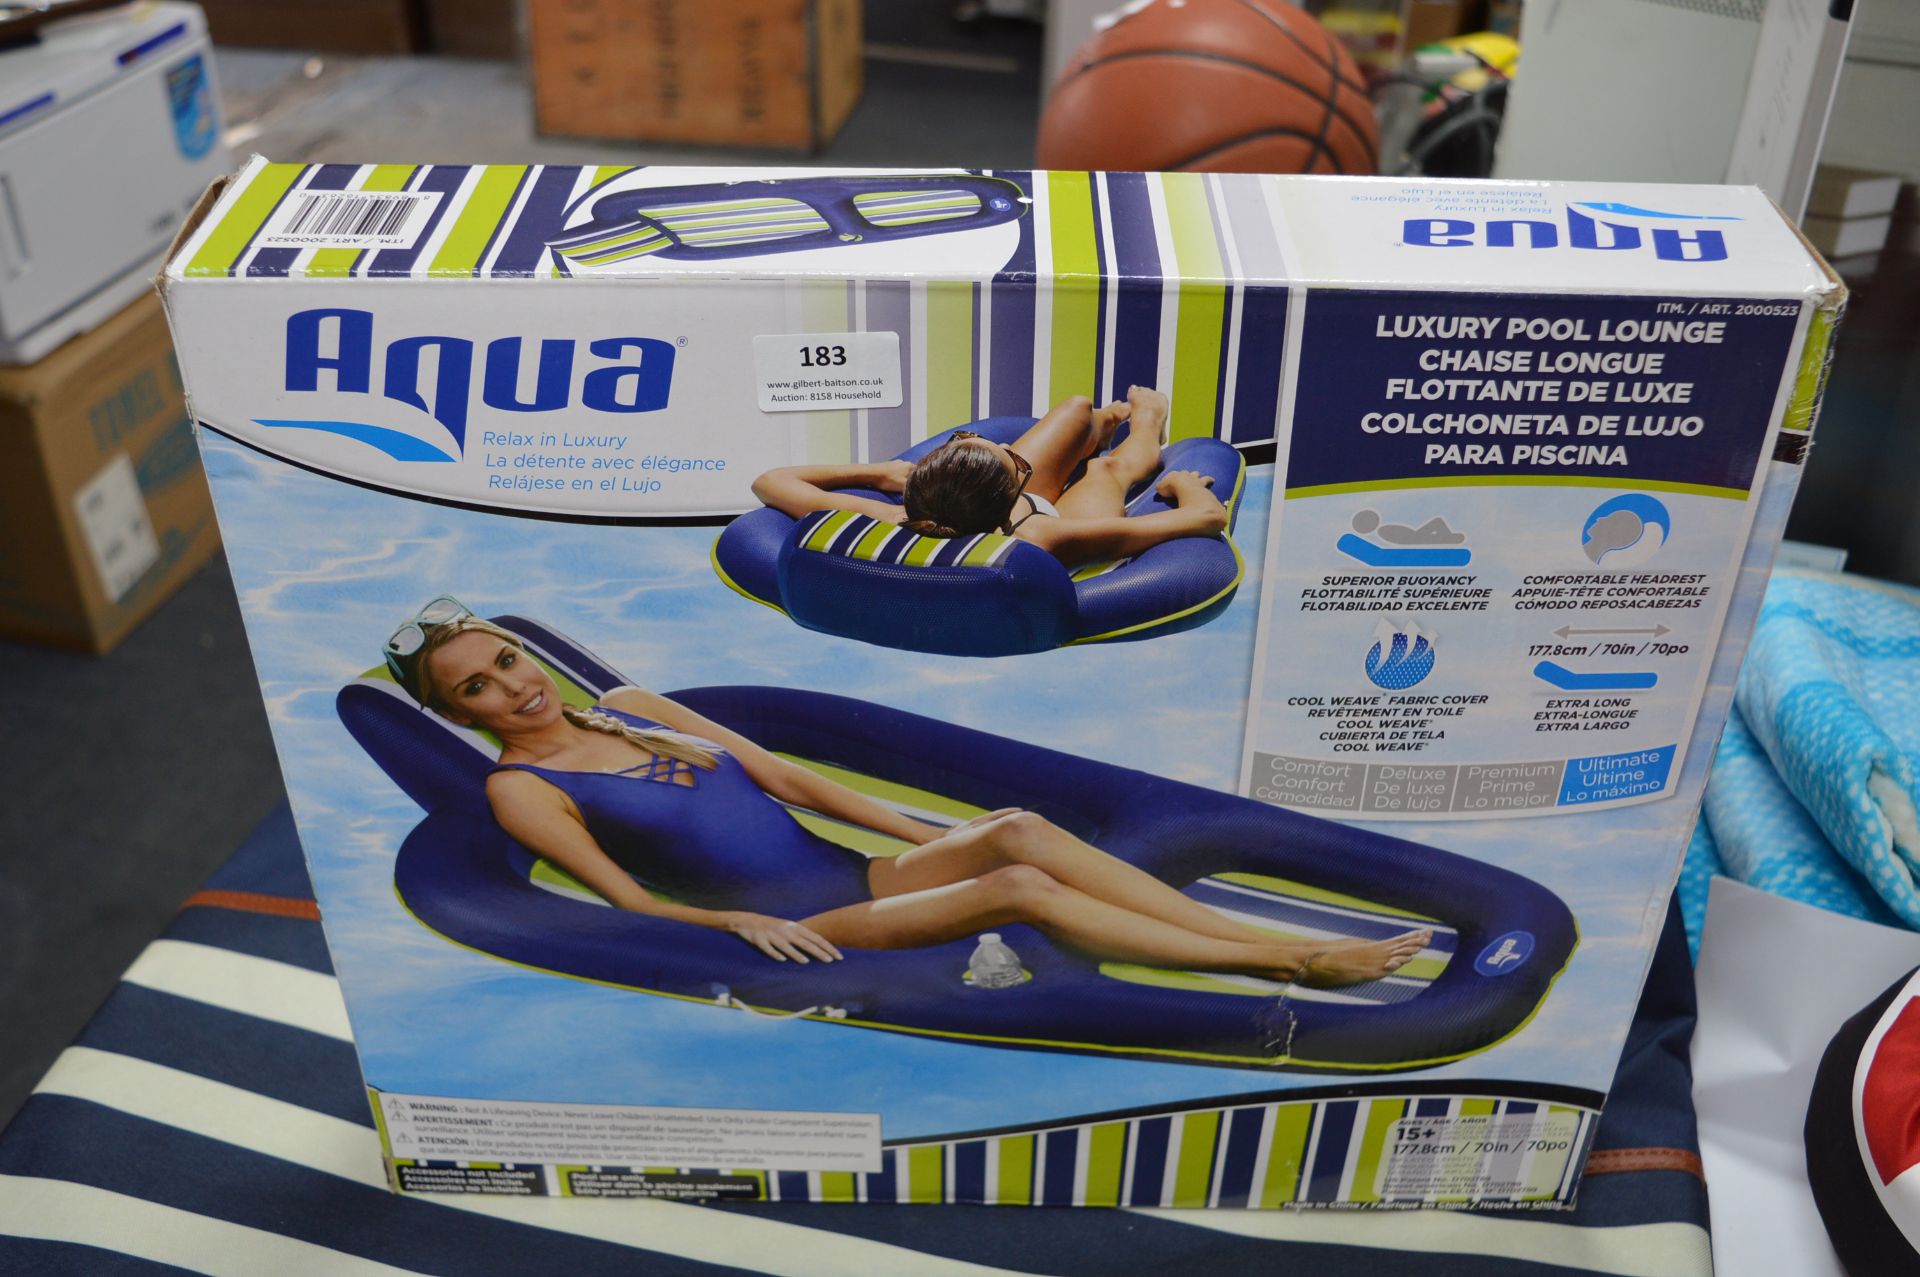 *Aqua Luxury Pool Lounger